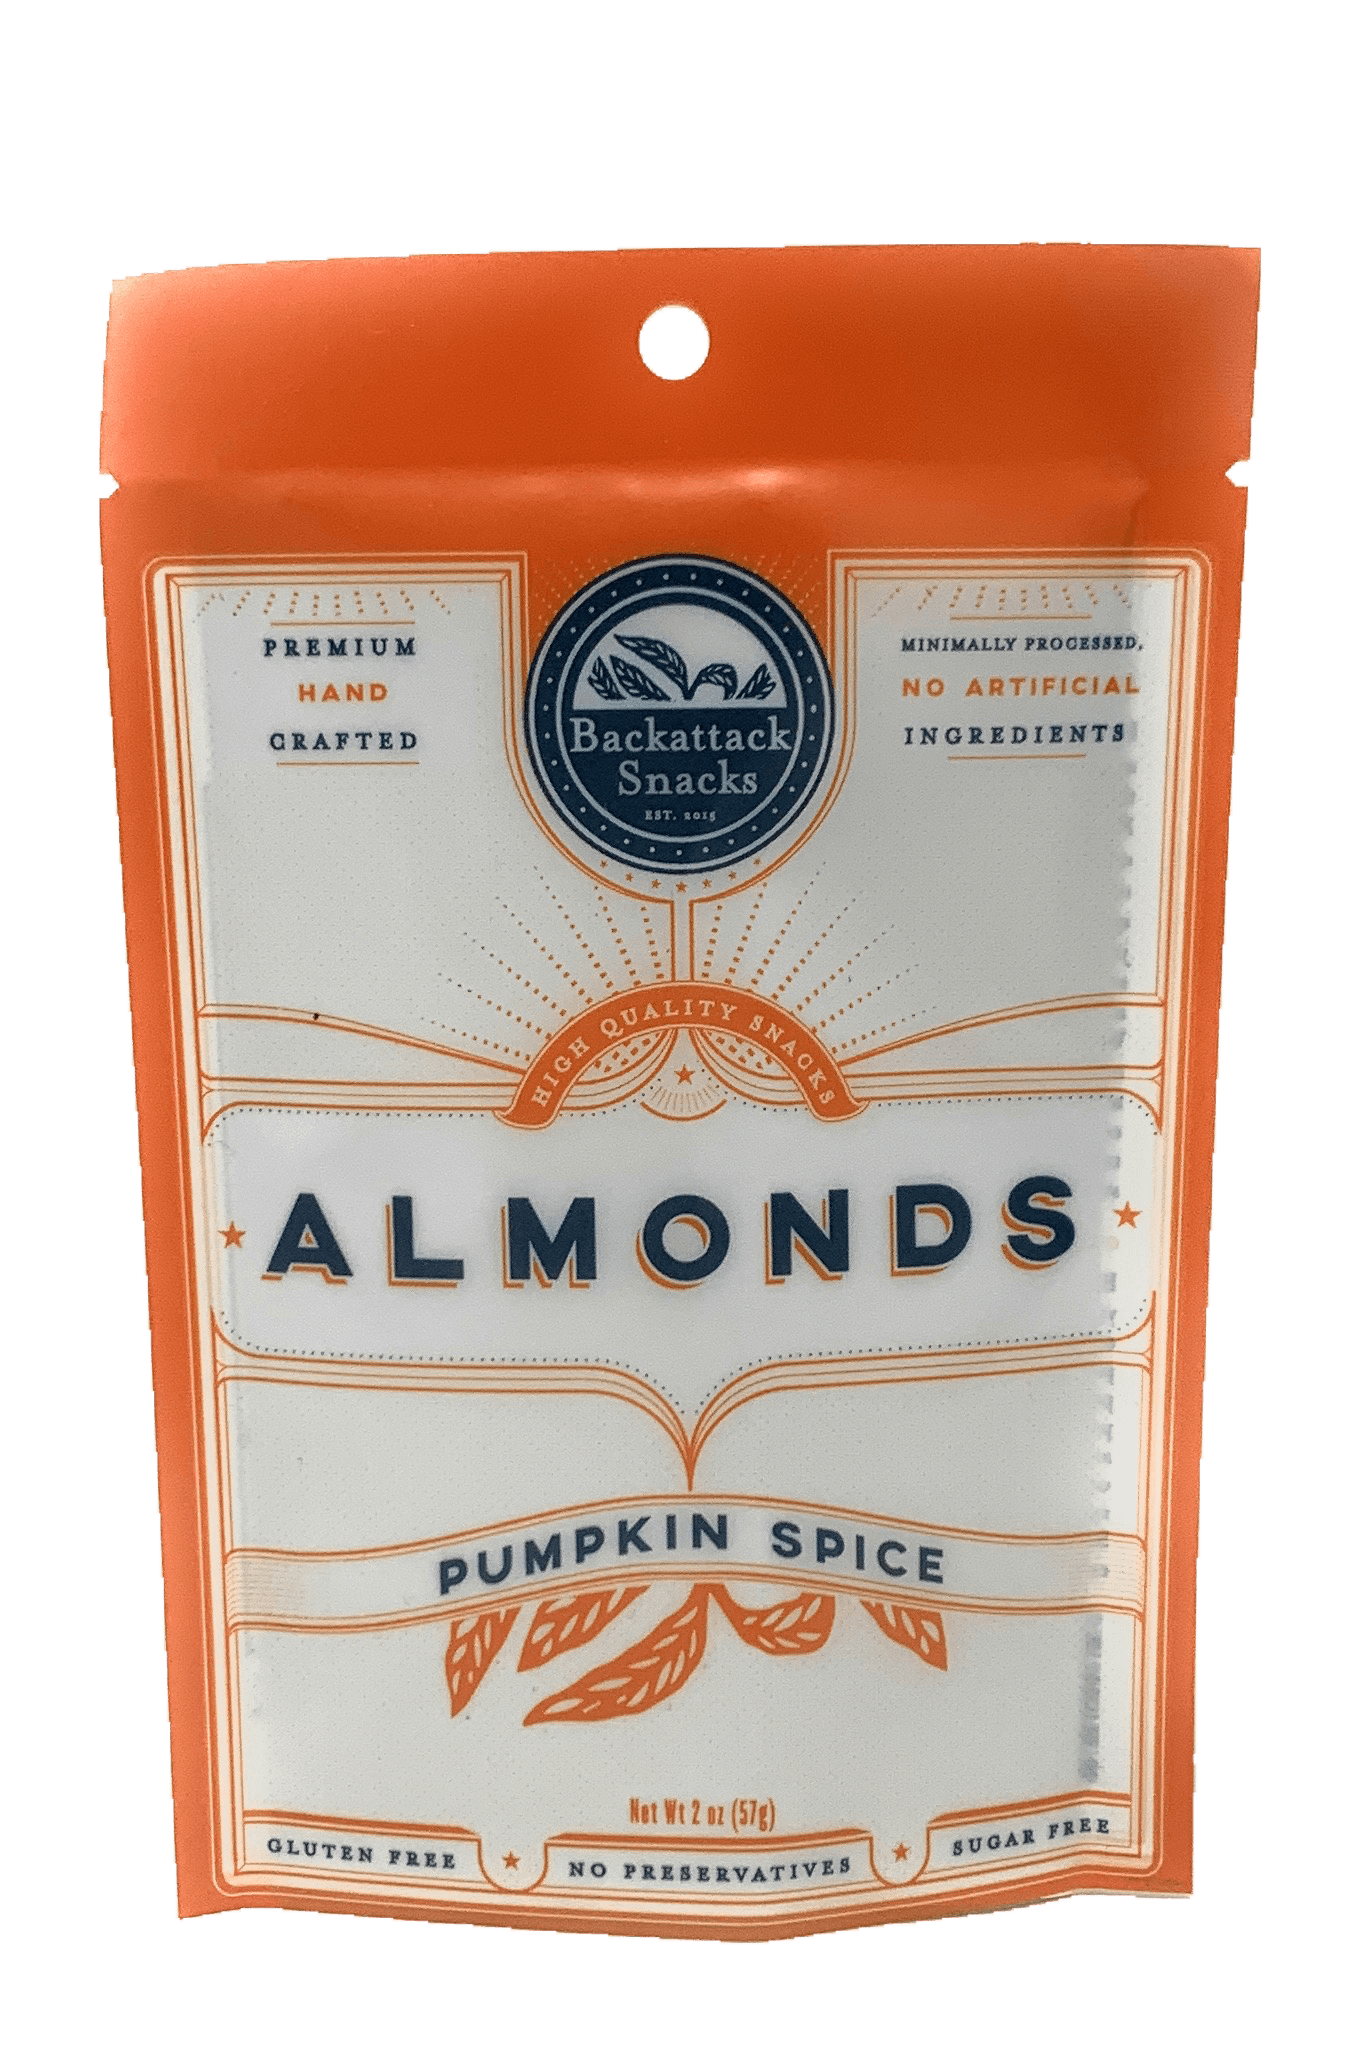 Pumpkin Spice Flavored Almonds 2oz packs - Backattack Snacks 